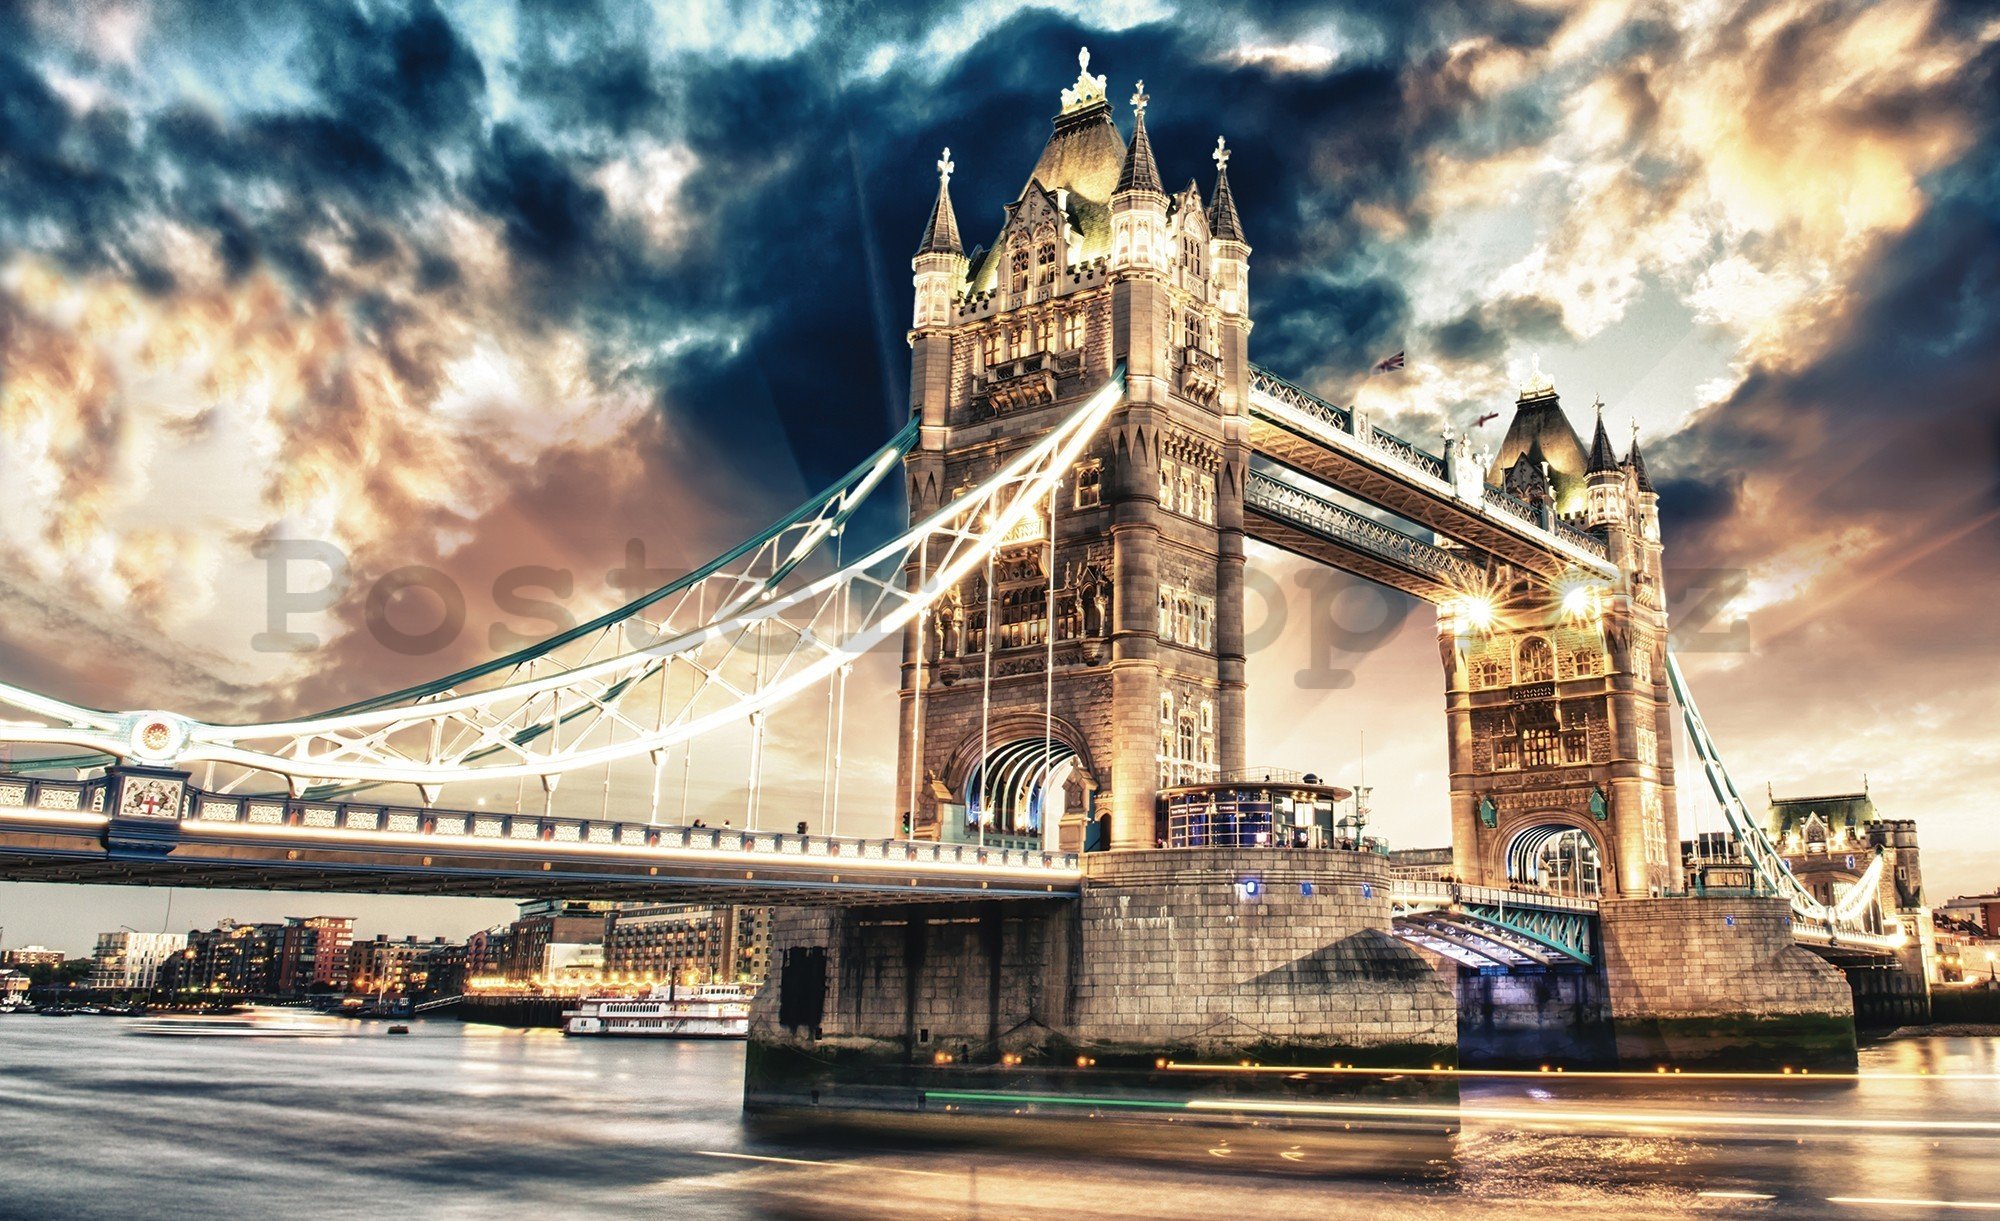 Fototapeta vliesová: Tower Bridge (3) - 416x254 cm